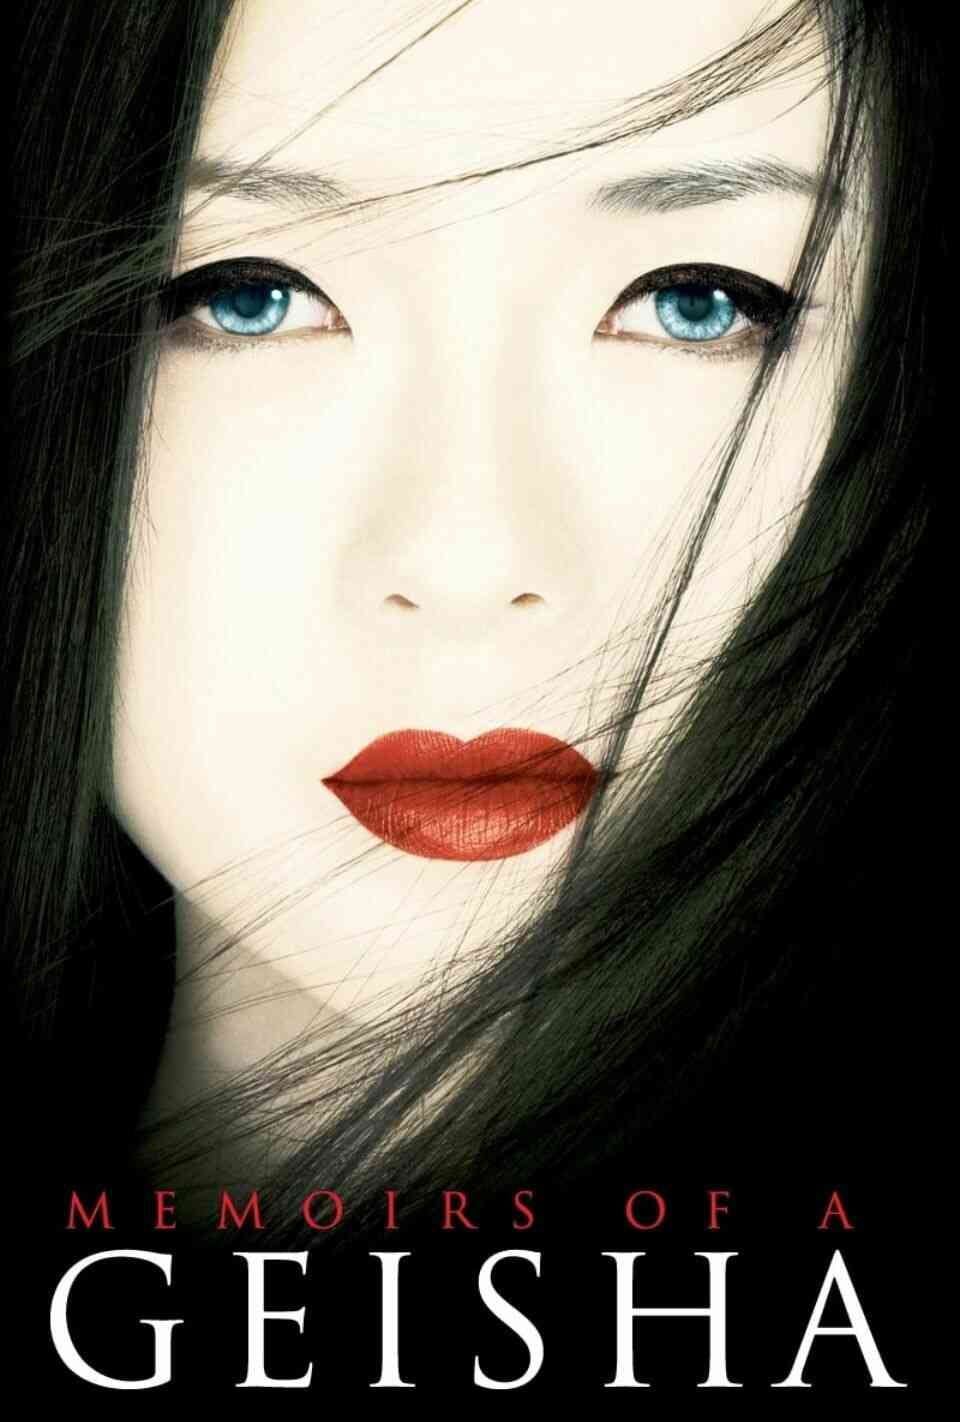 Read Memoirs of a Geisha screenplay (poster)